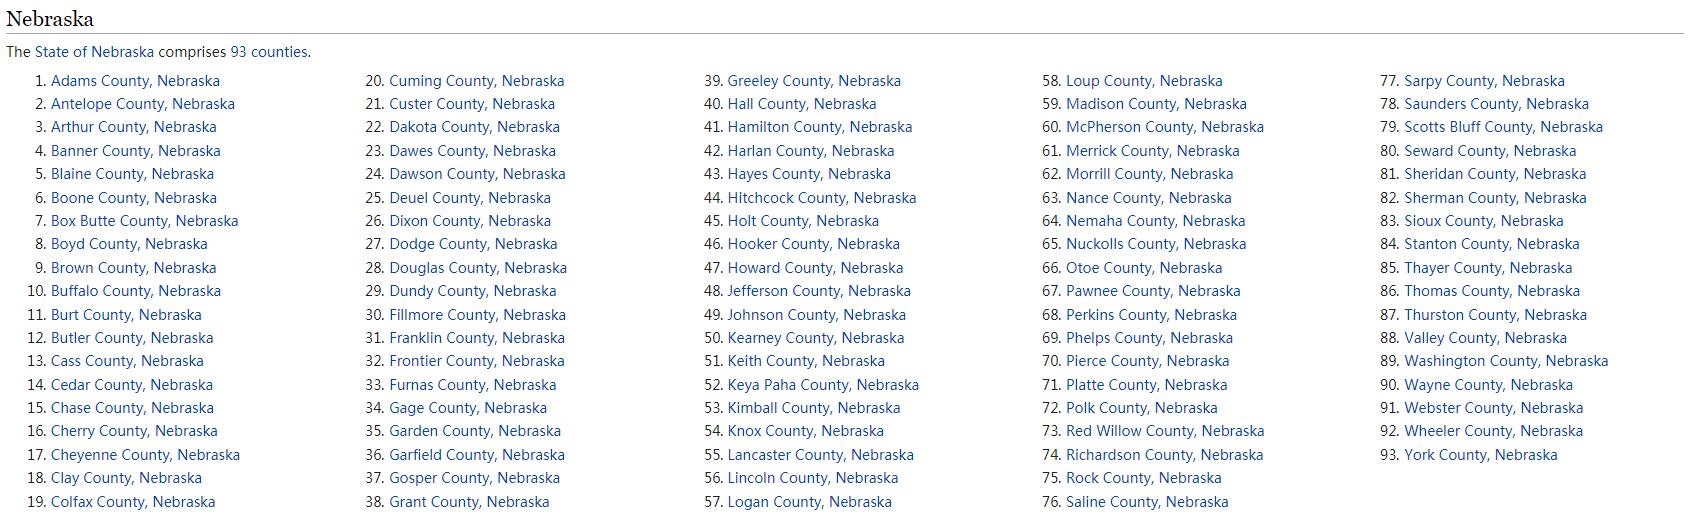 Nebraska Counties List